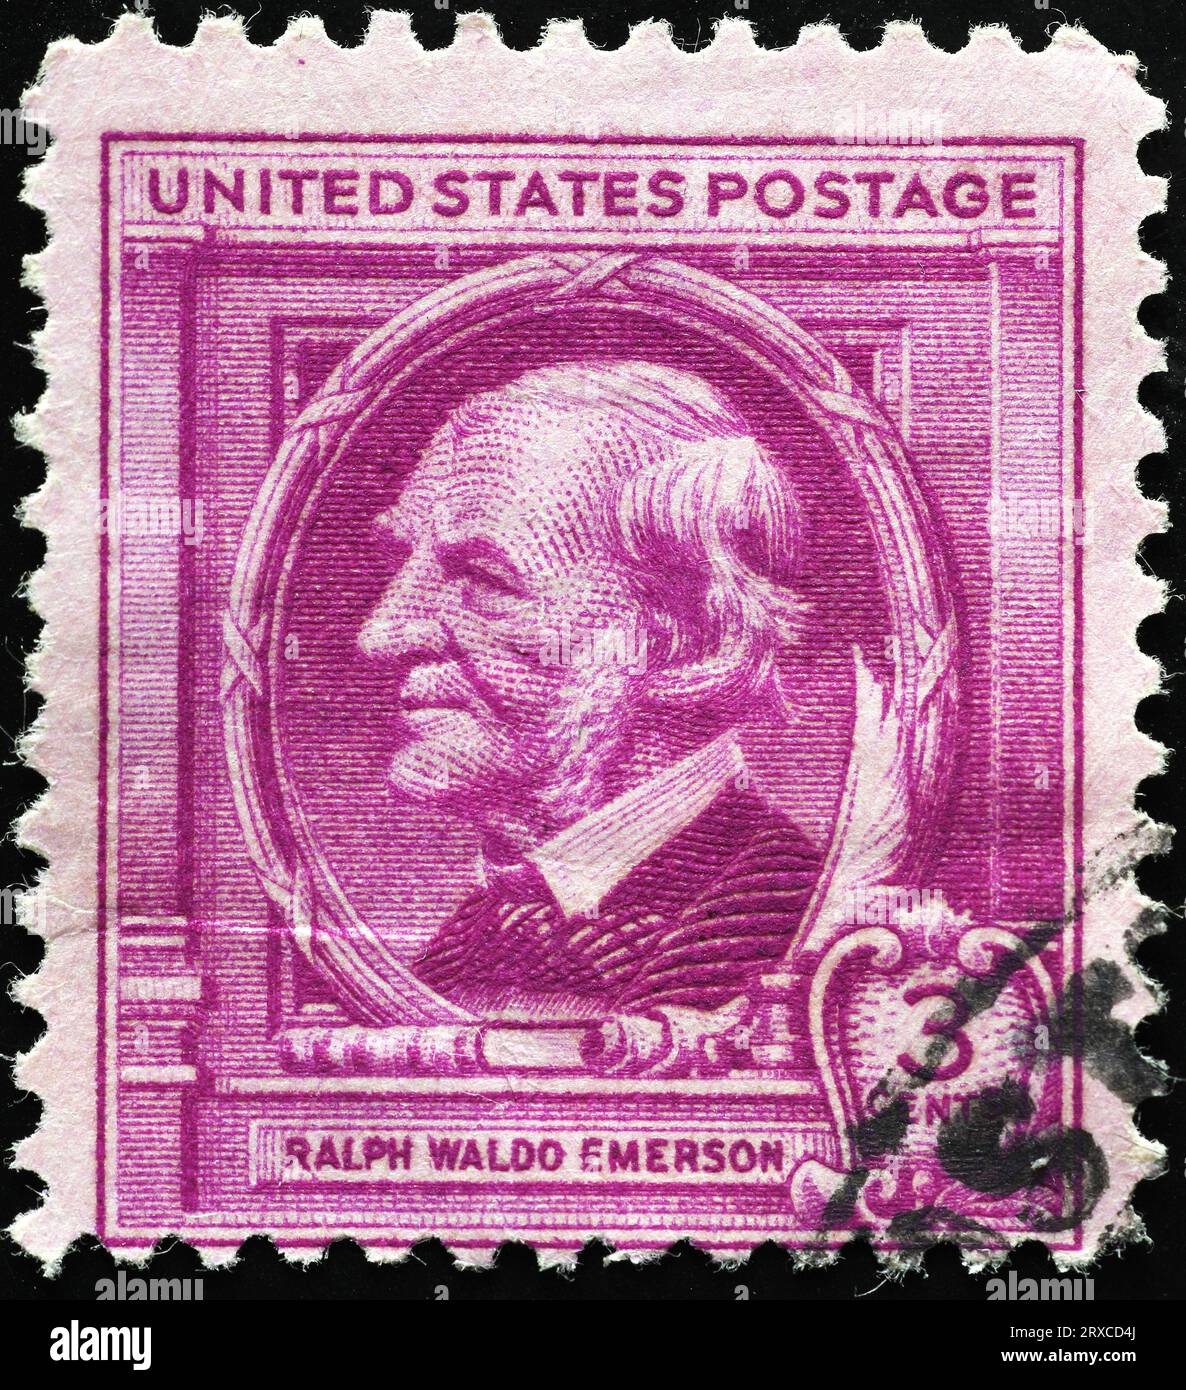 American philosopher Ralph Waldo Emerson on vintage stamp Stock Photo